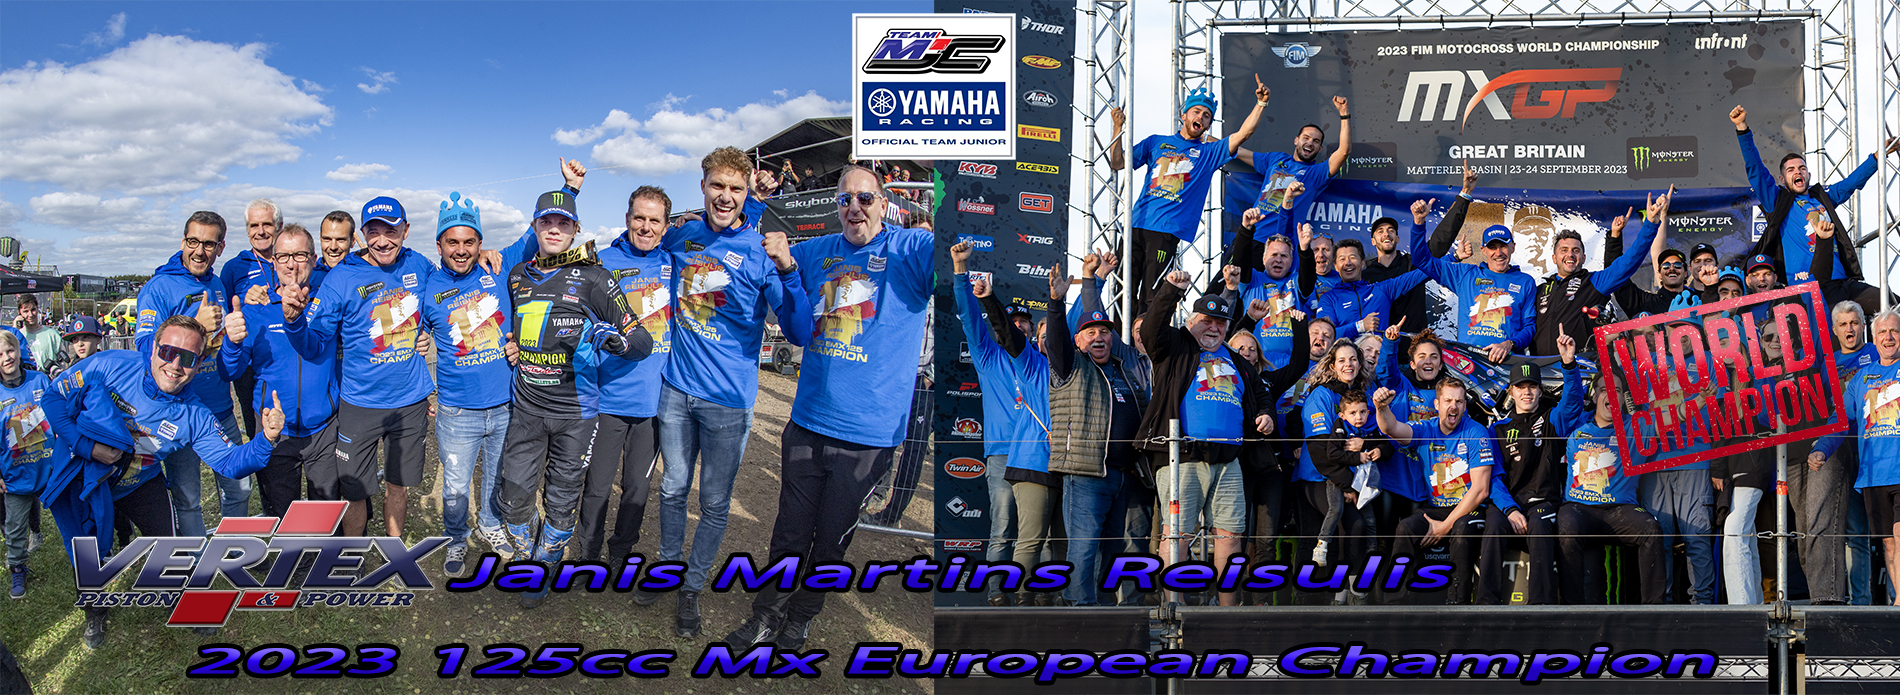 Vertex & Yamaha MJC & Janis Martins Reisulis 2023 125 Mx European Champion